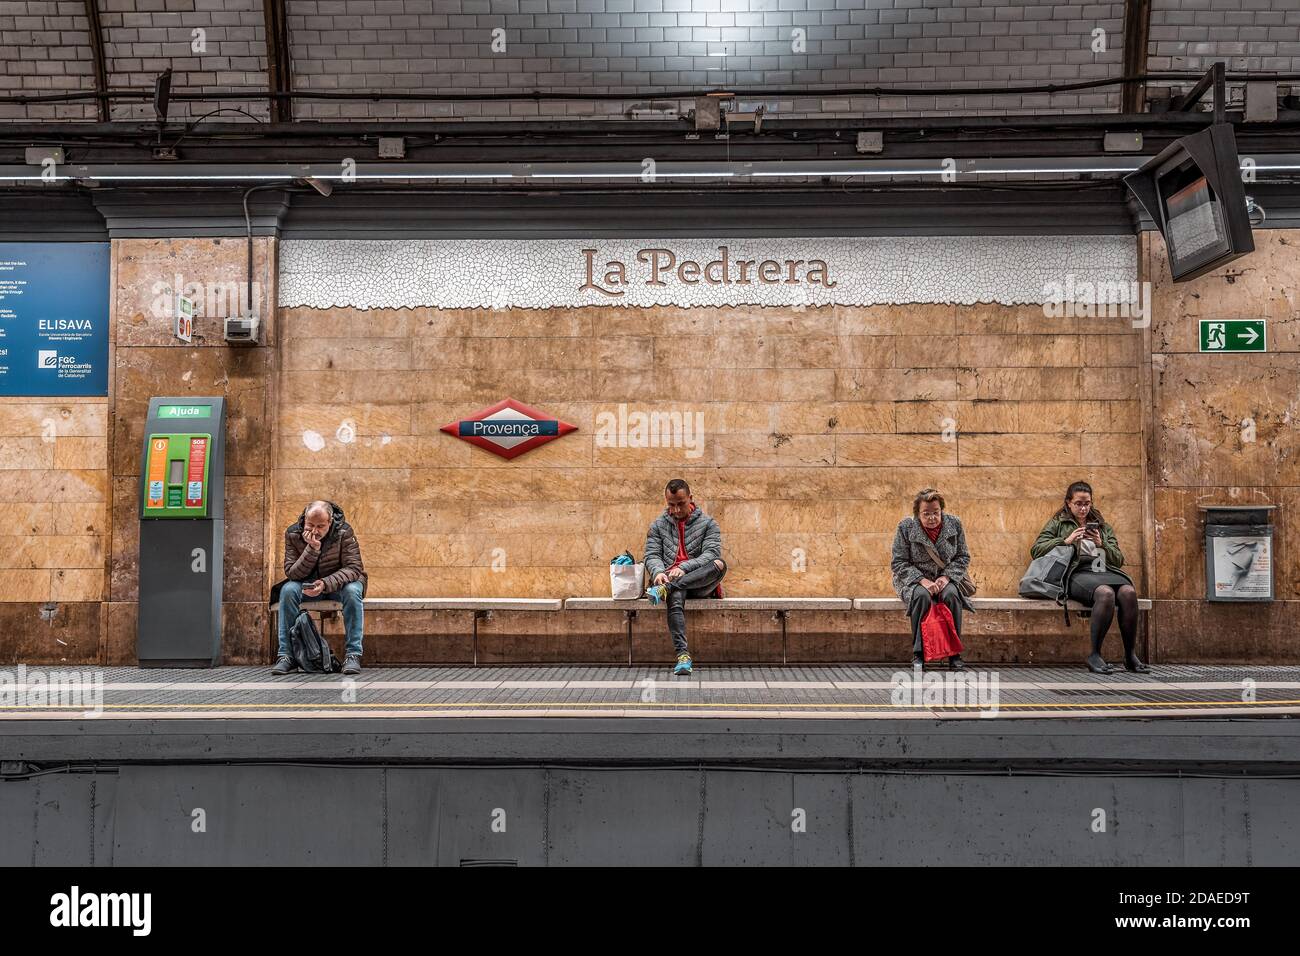 Barcelona, Spain - Feb 24, 2020: People wait at Provenca metro station at night Stock Photo